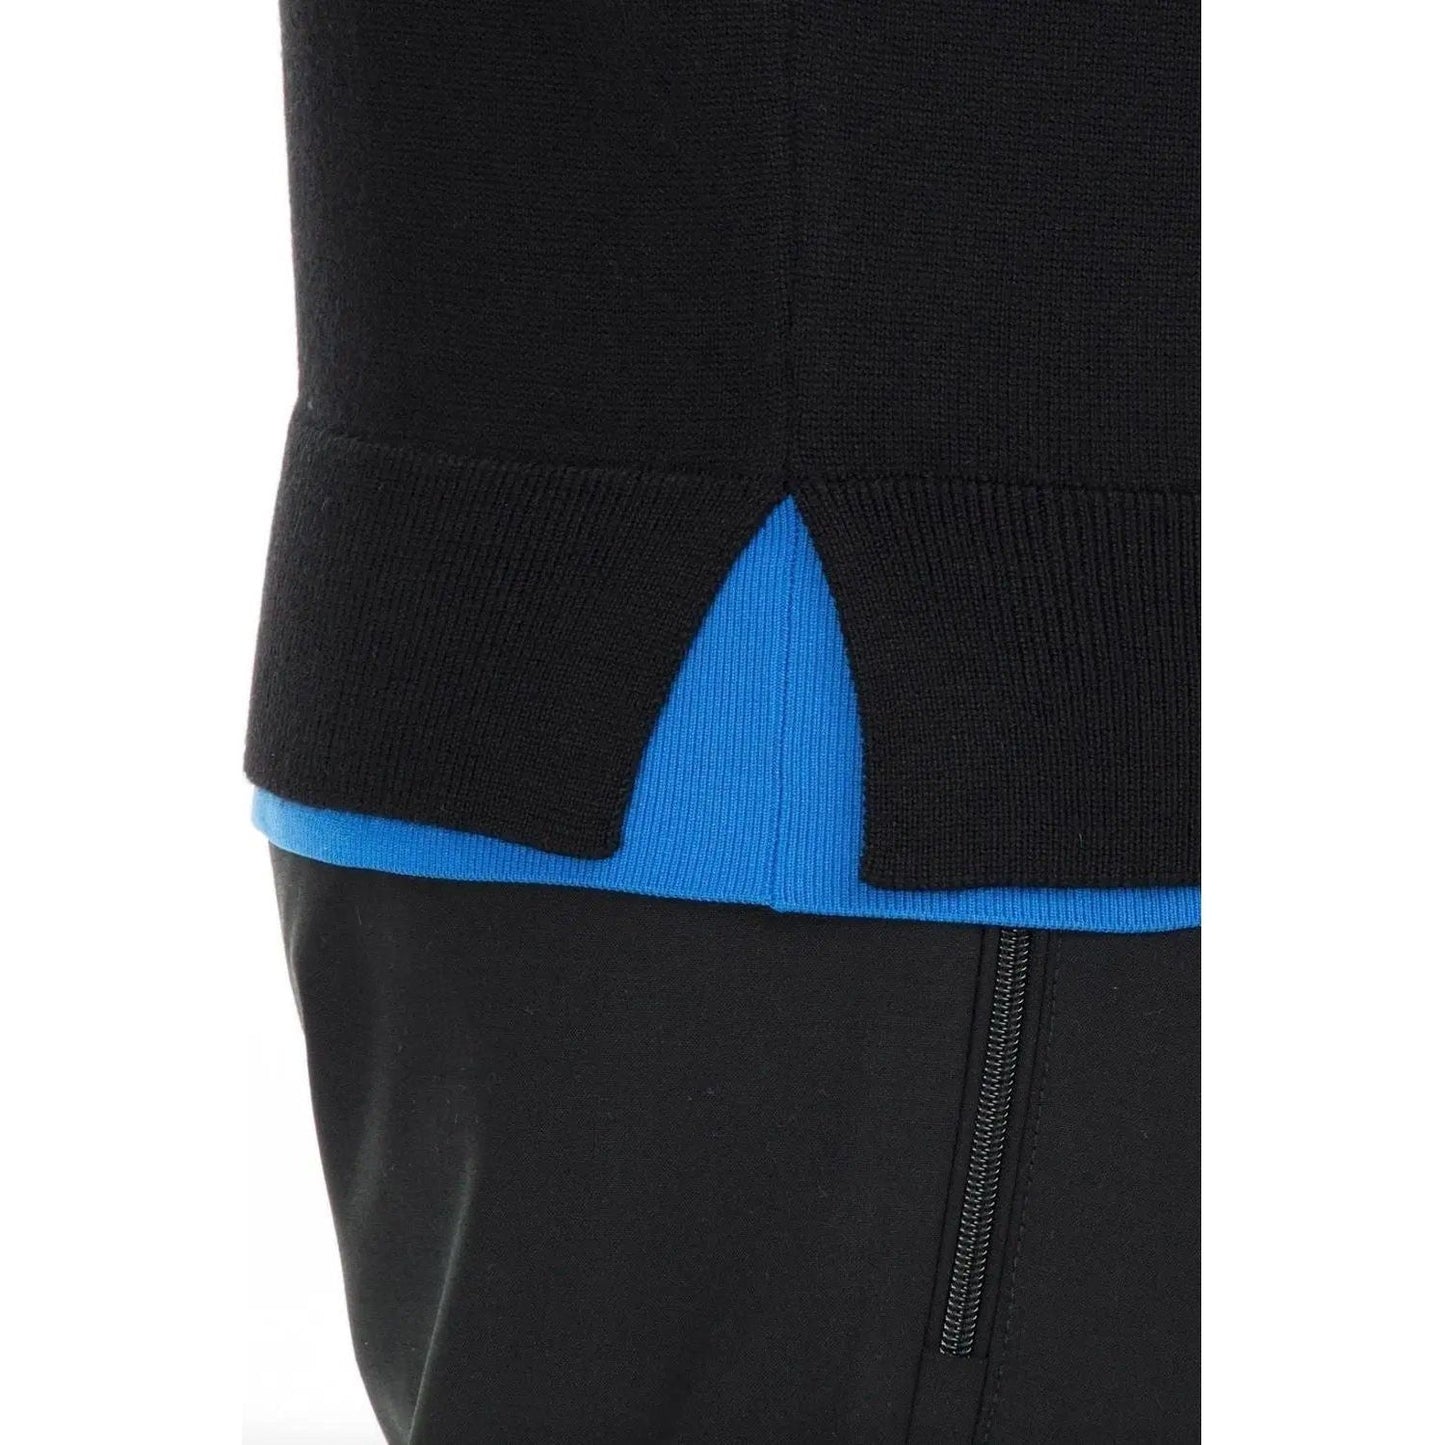 Kenzo Sleek Black Roundneck Sweater with Blue Accents sleek-black-roundneck-sweater-with-blue-accents Kenzo-_-Sleek-Black-Roundneck-Sweater-with-Blue-Accents-_-McRichard-Designer-Brands-113101498.jpg